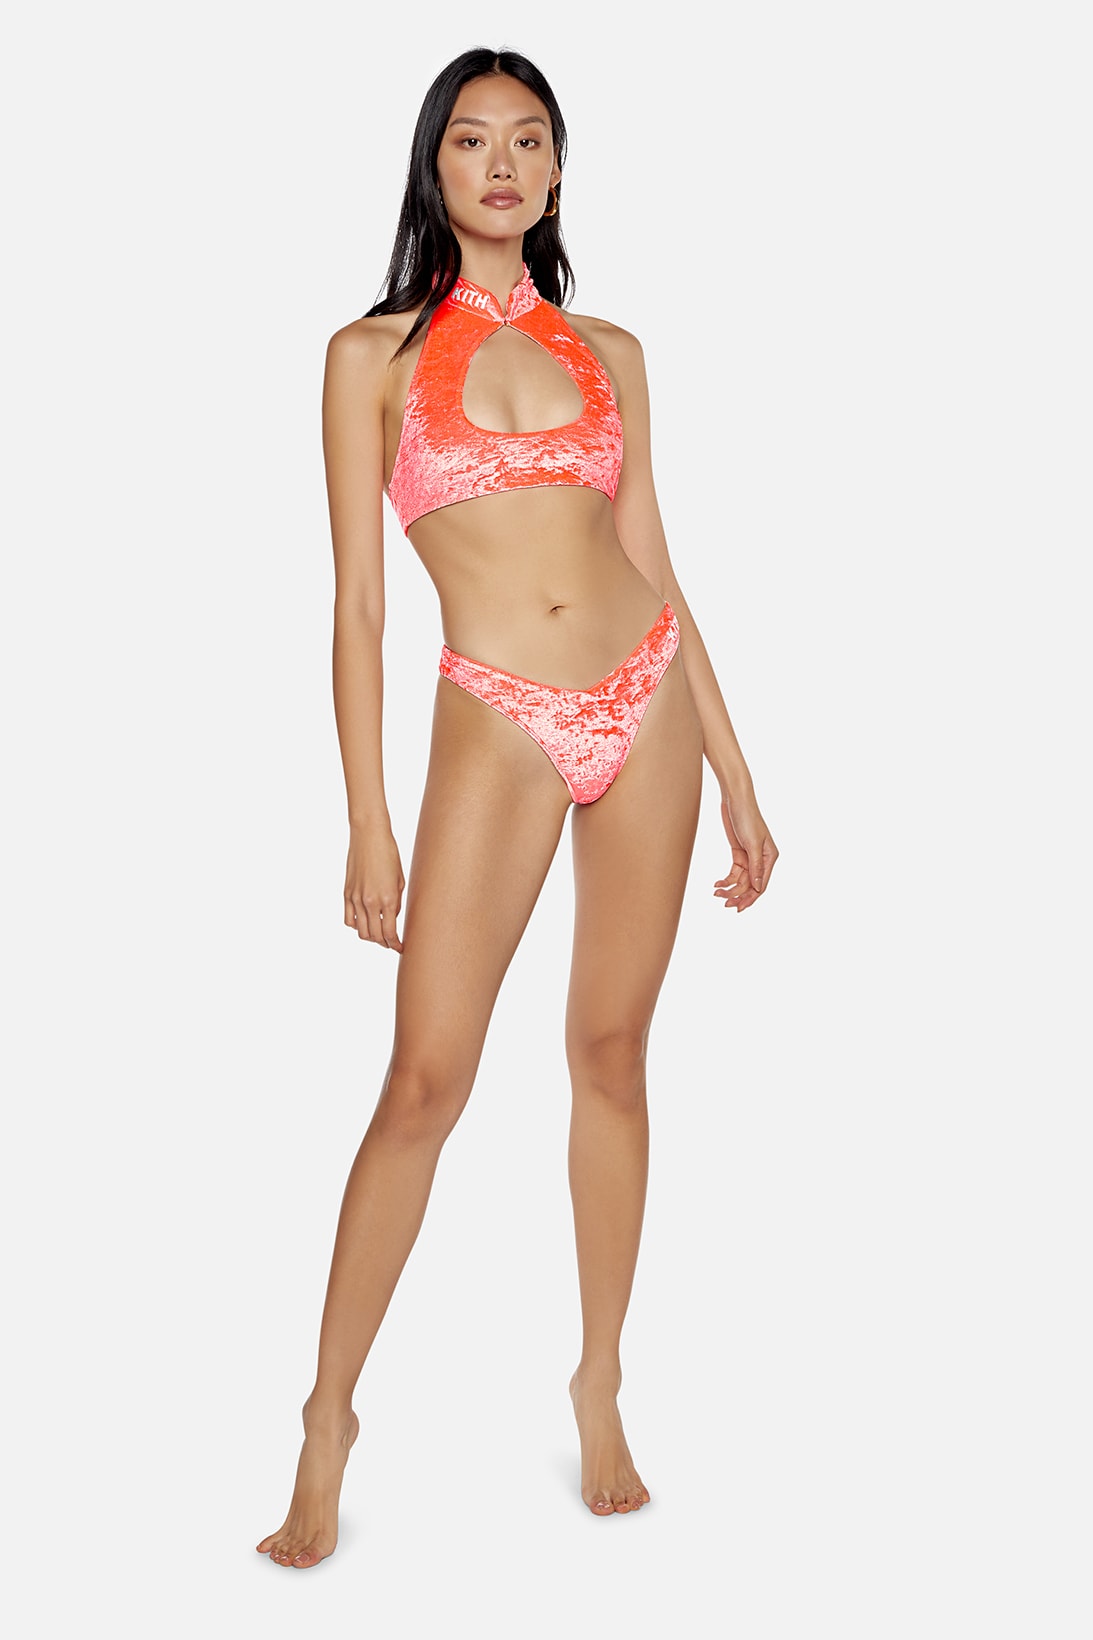 kith frankies bikinis collaboration bottom top neon pink